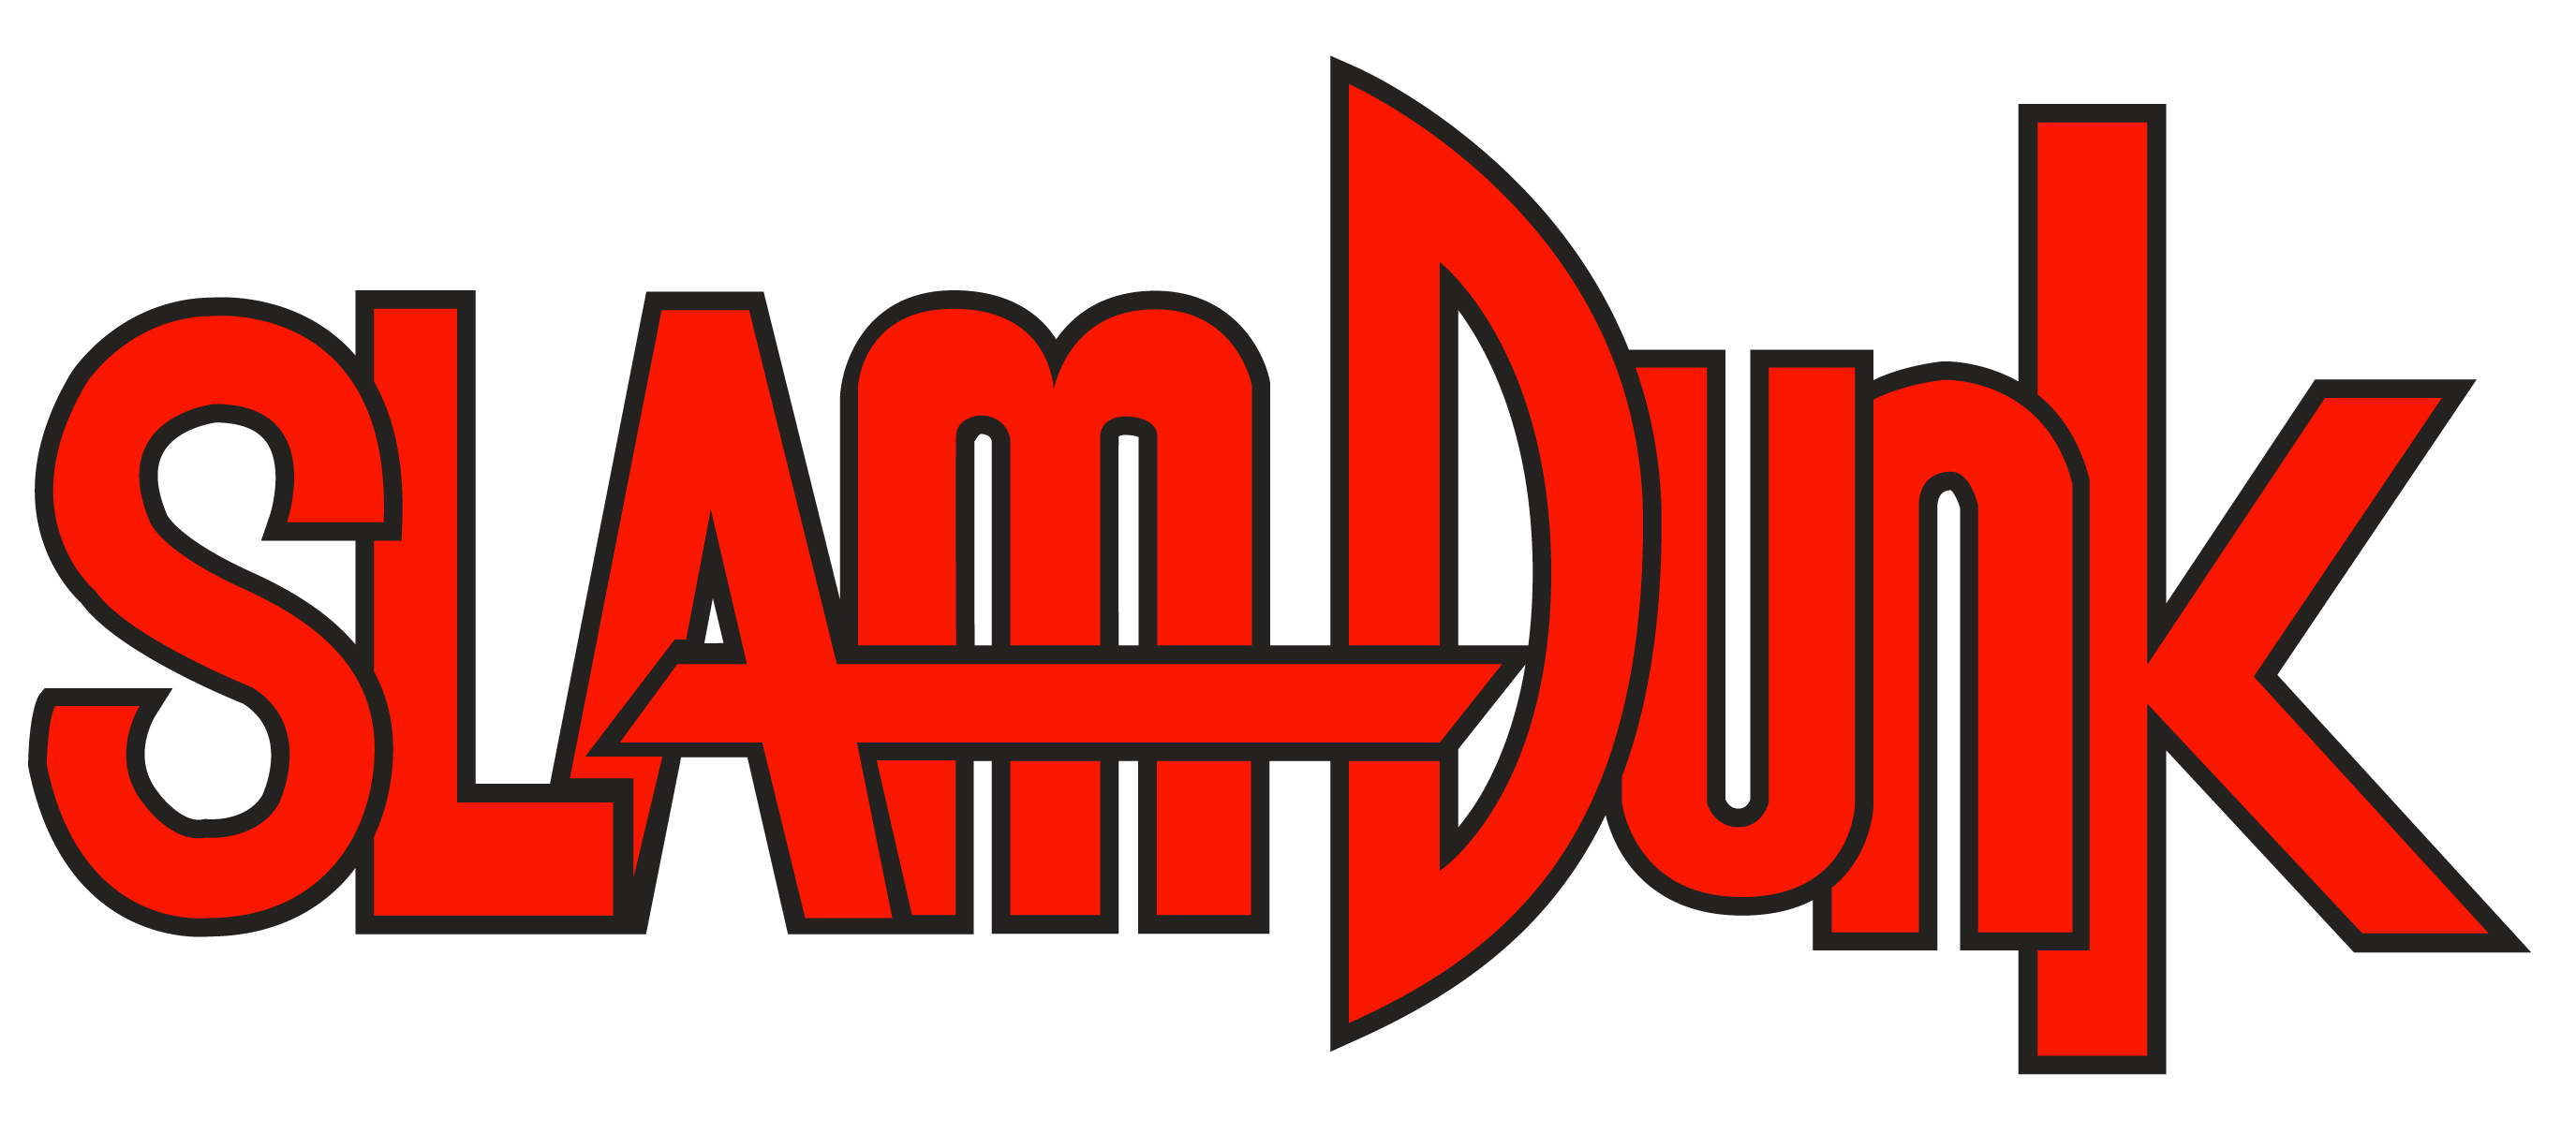 Dunk Logo - SHOHOKU | ANIME/MANGA LOGOS | Slam dunk anime, Logos, Slam dunk